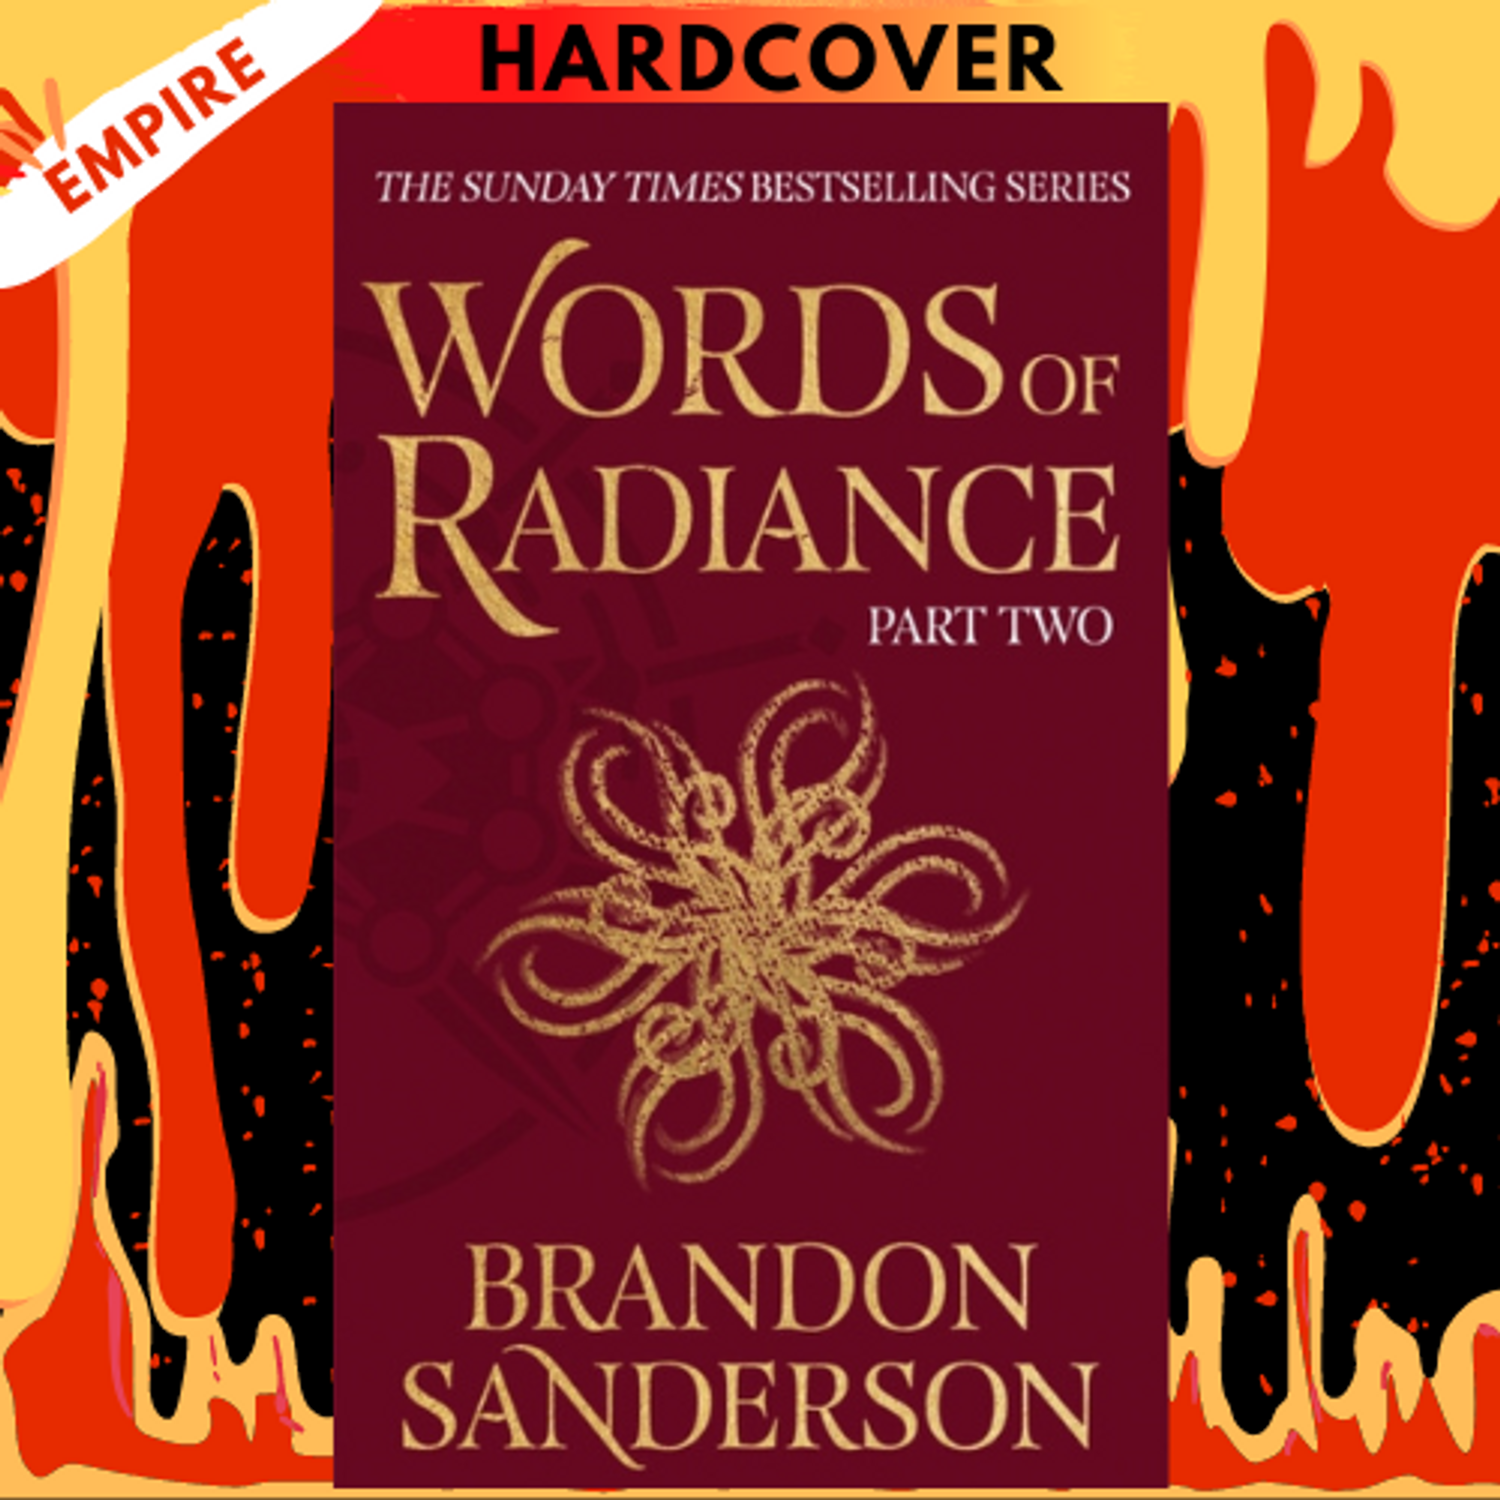 Words of radiance in Brasil : r/brandonsanderson